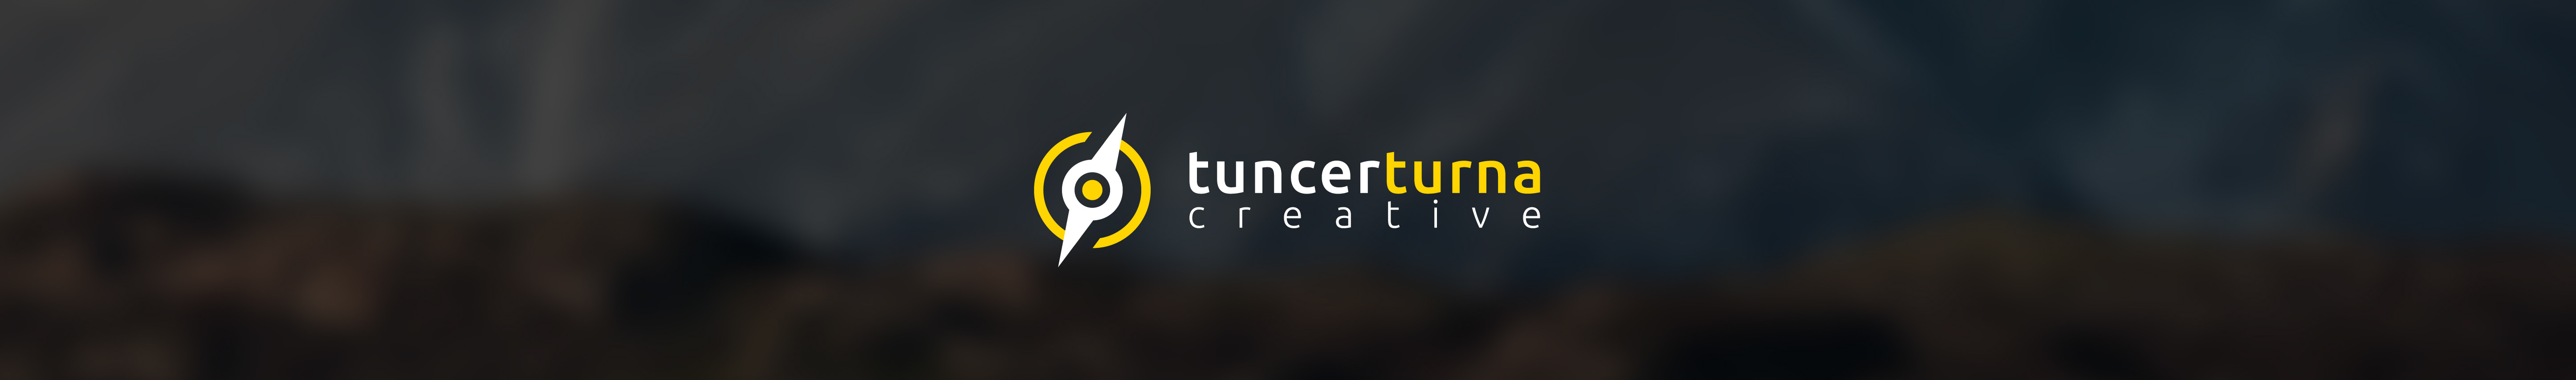 Tuncer Turna ✔'s profile banner